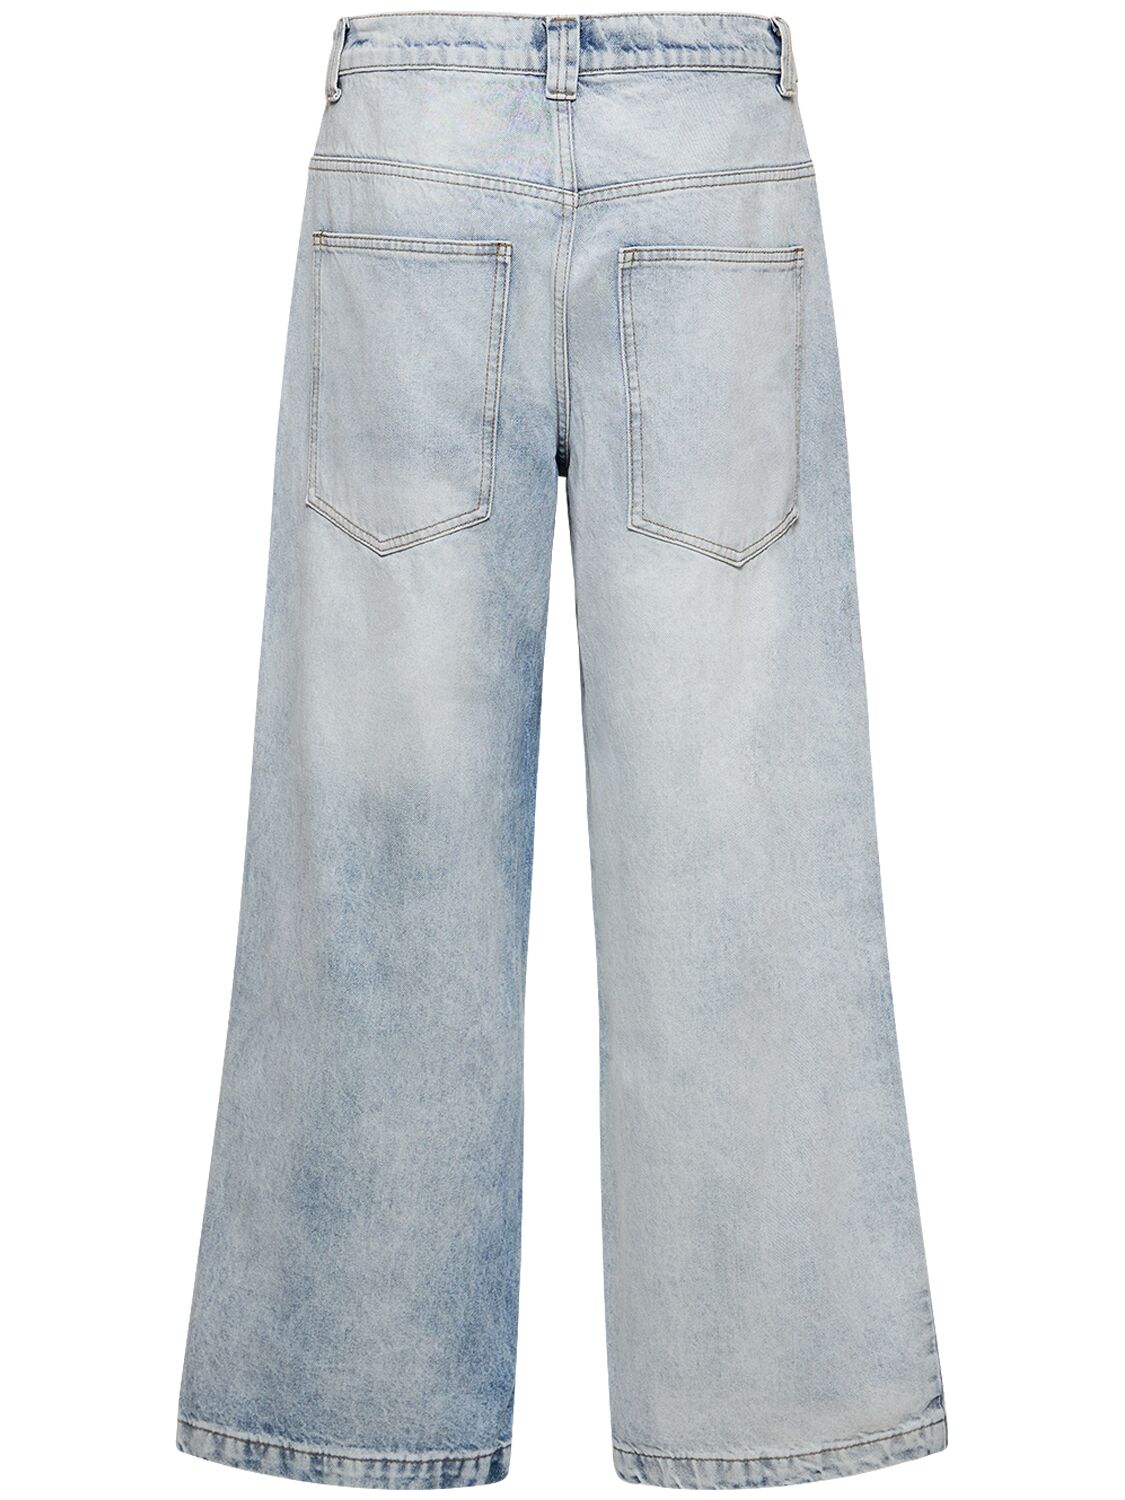 Shop Jaded London Colossus Blue Acid Wash Jeans